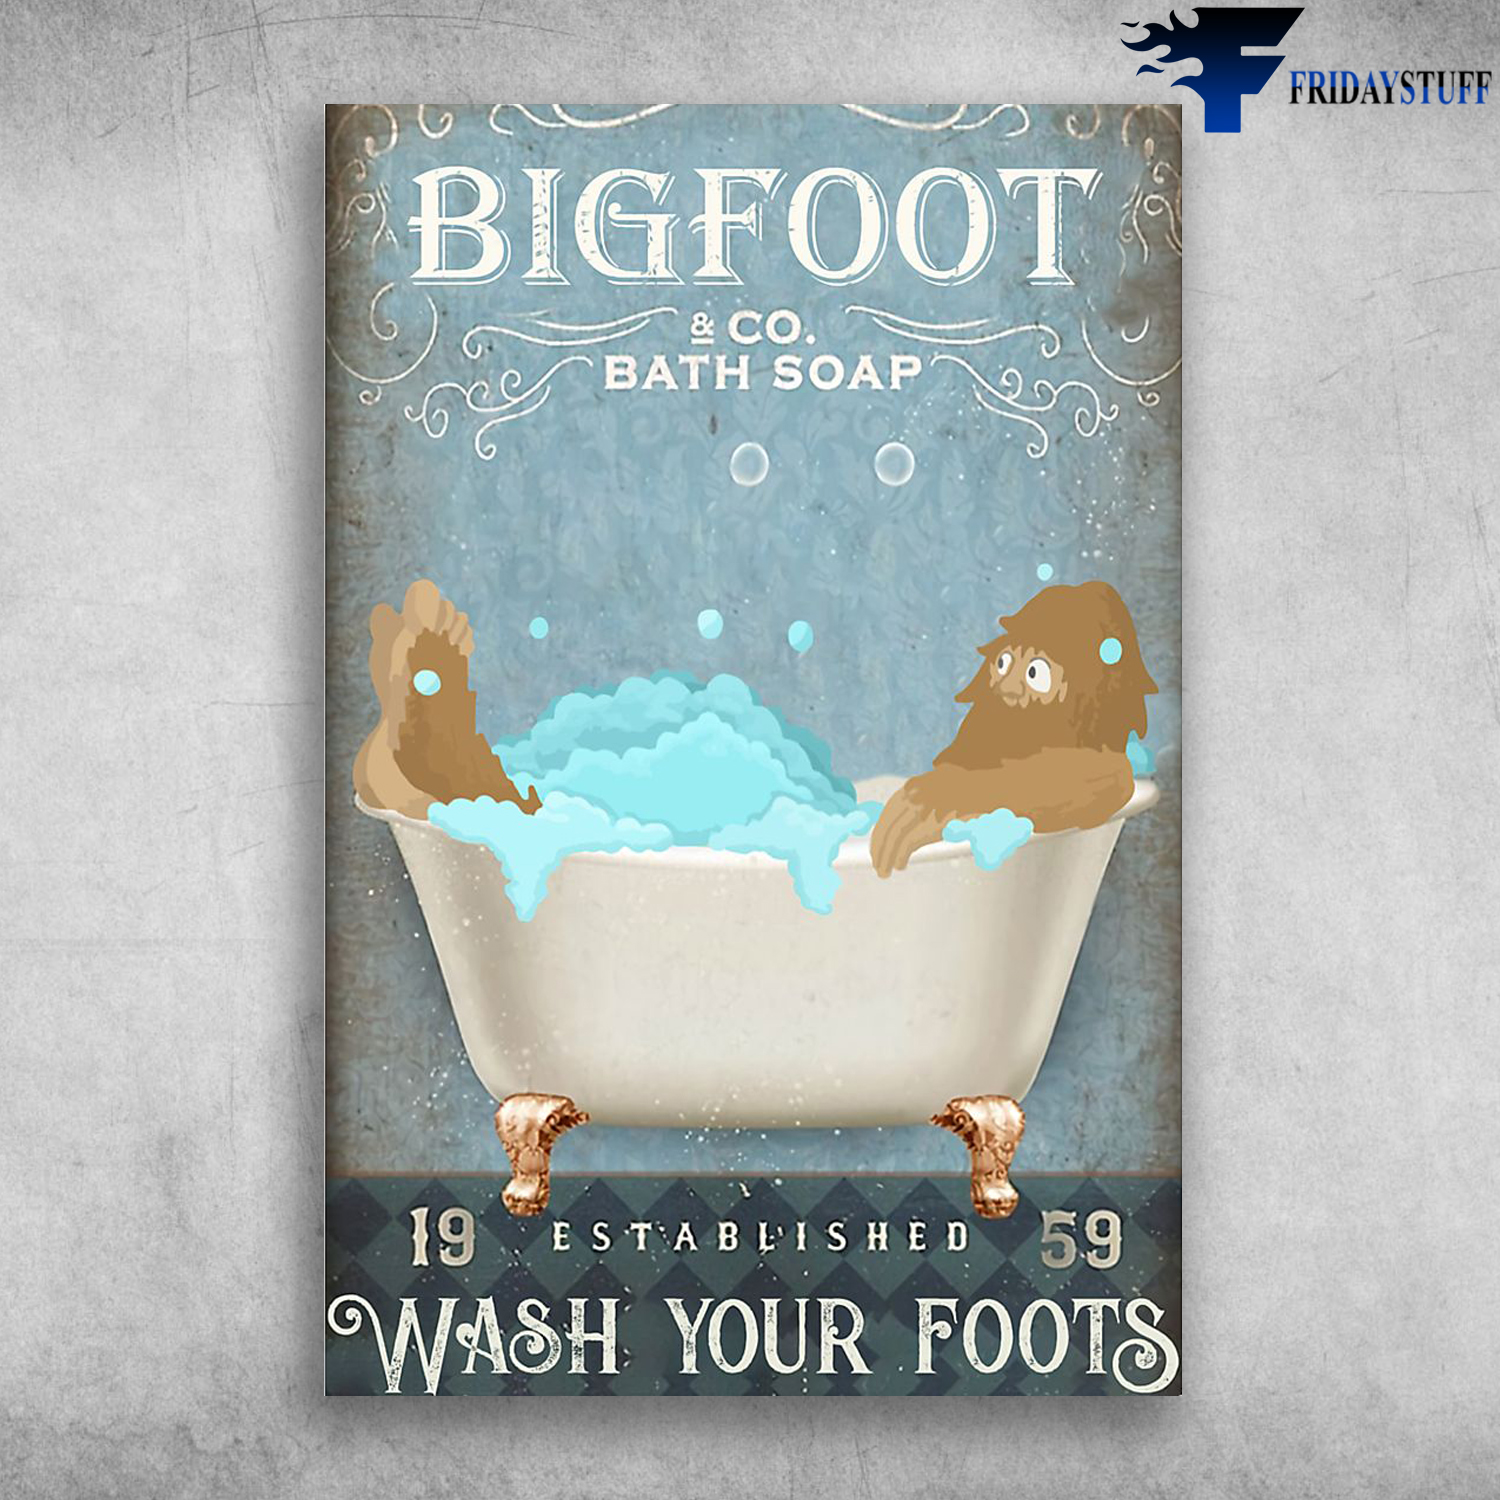 Bigfoot In The Bathtub - Bigfoot CO. Bath Soap, 19 Established 59, Wash Your Foots